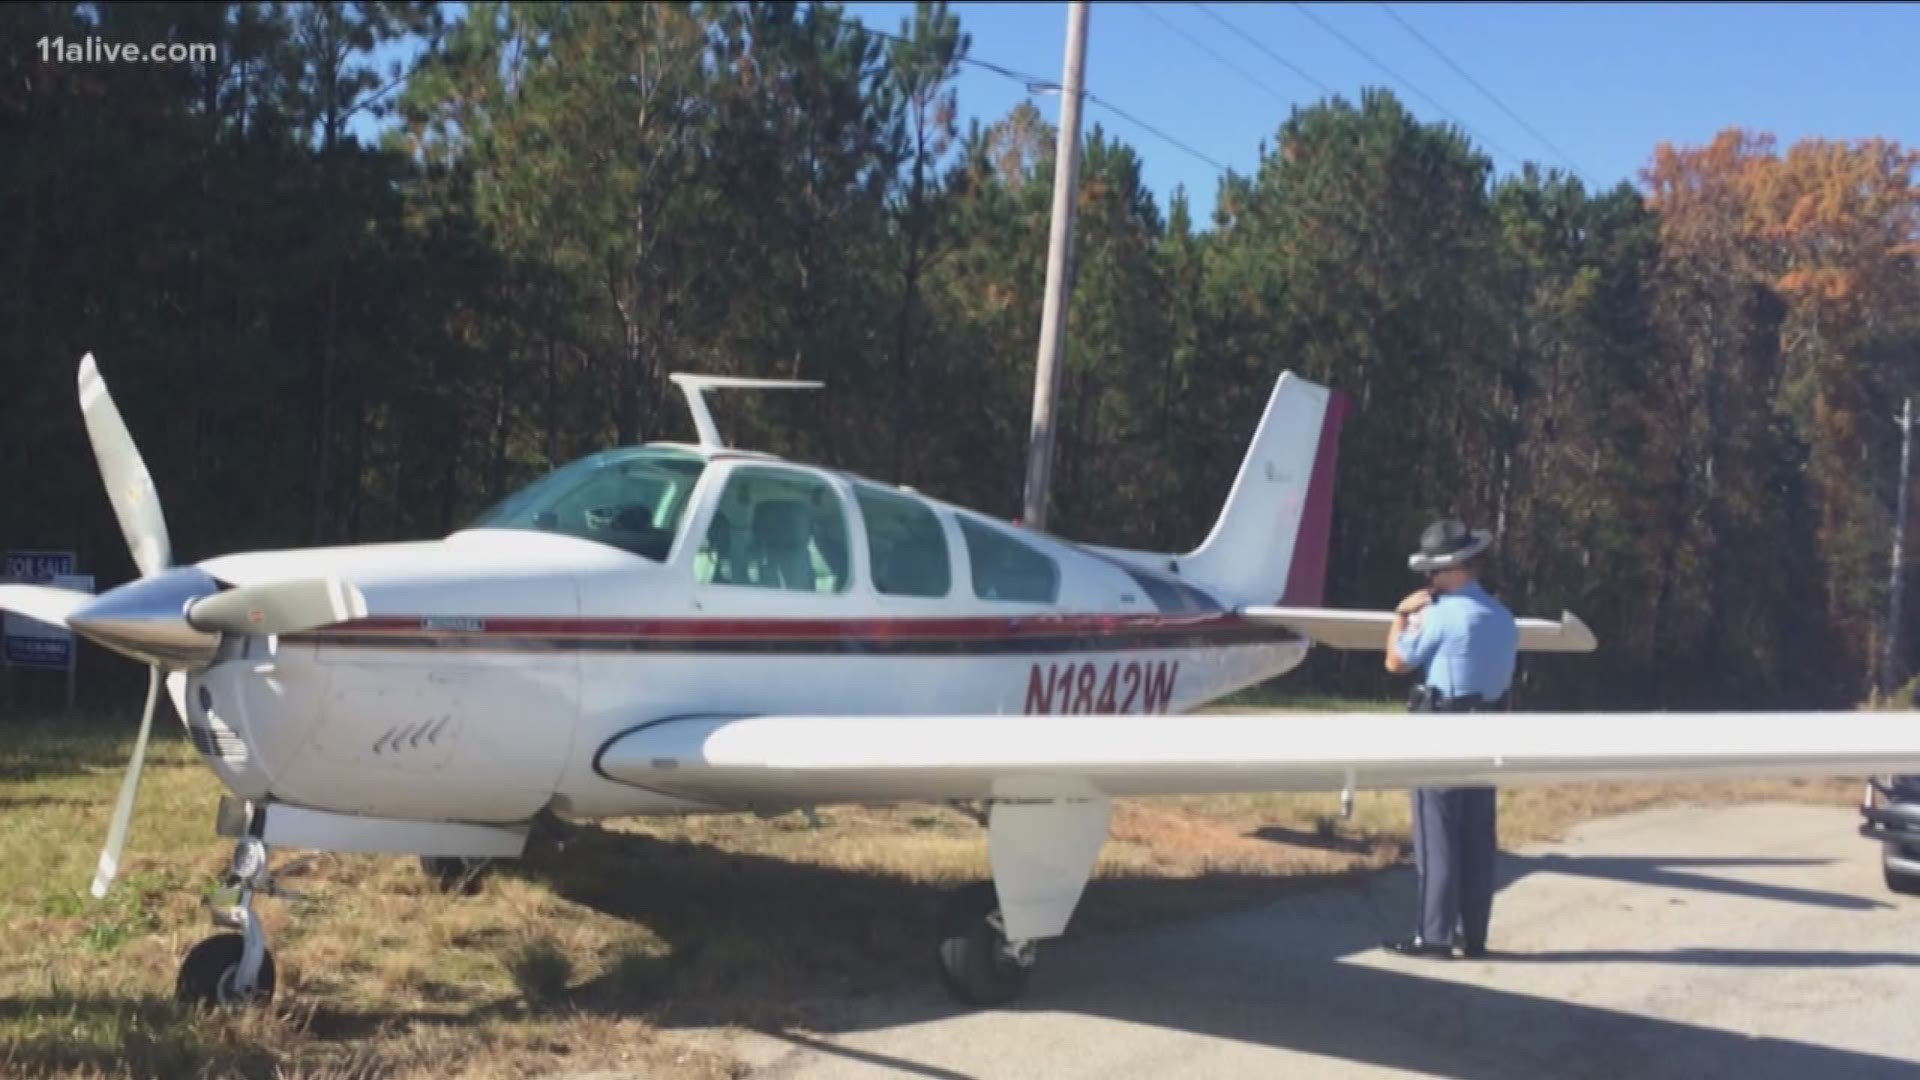 The plane made an emergency landing near a Walmart warehouse near Highway 27. No one was hurt.